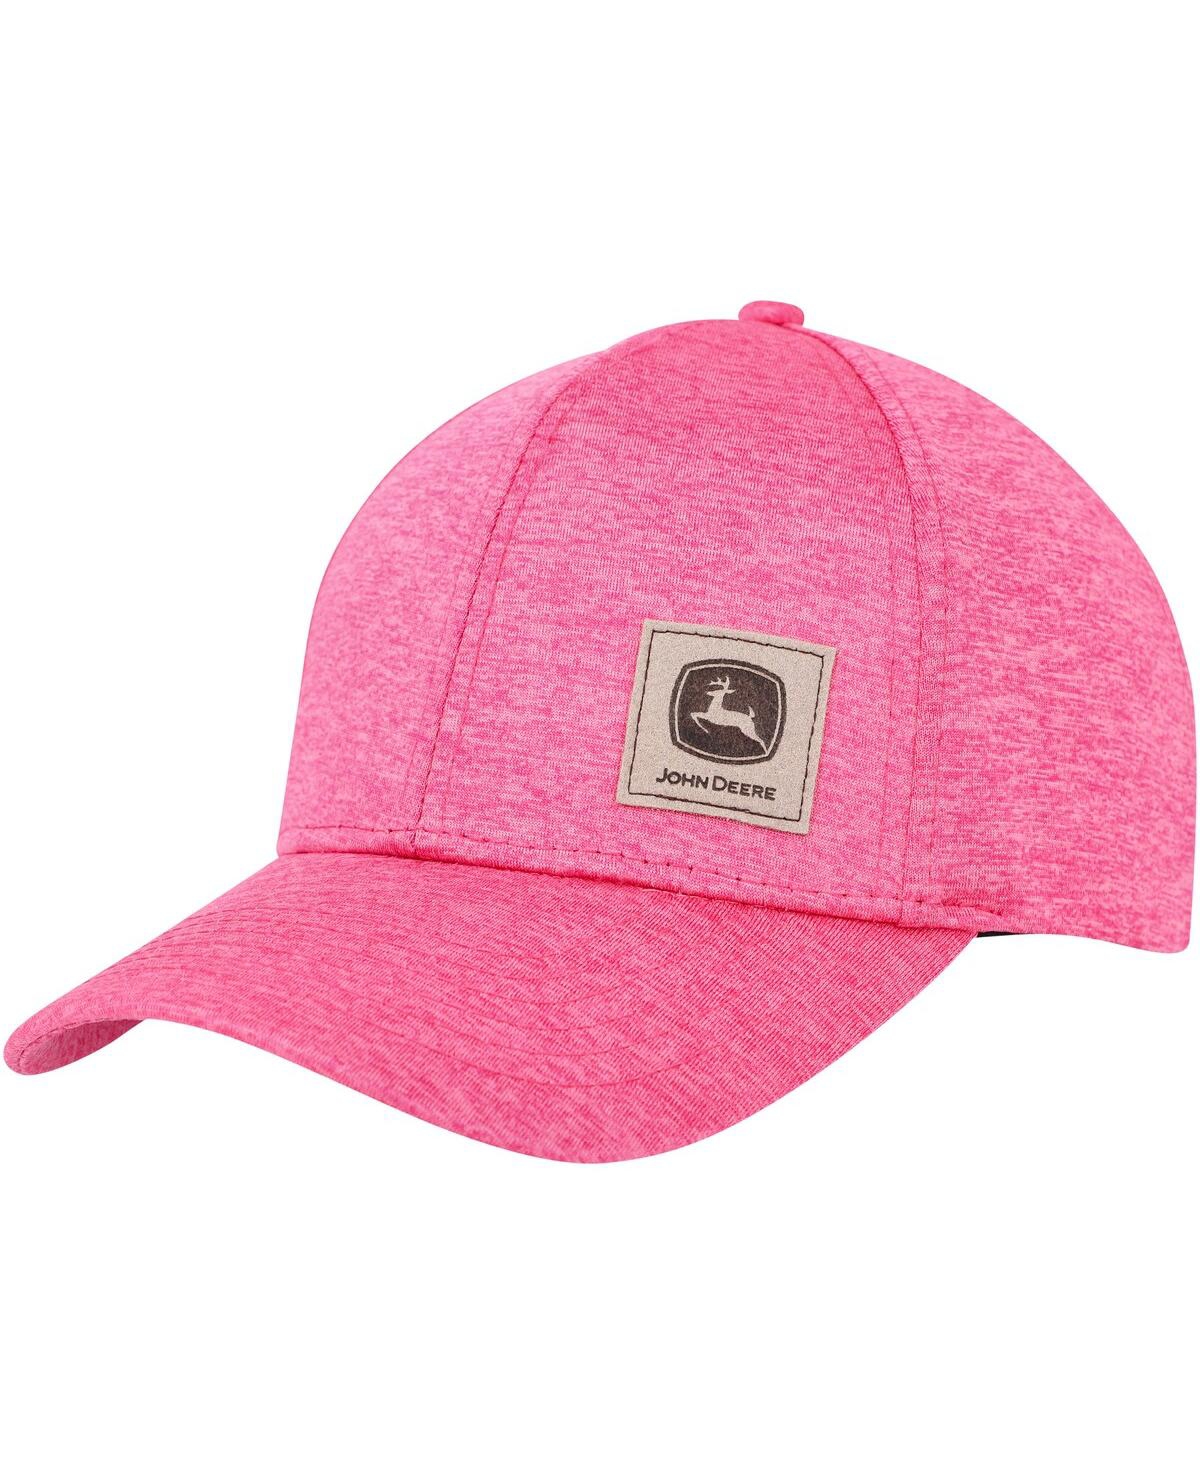 Women's Top of the World Pink John Deere Classic Space-Dye Adjustable Hat - Pink